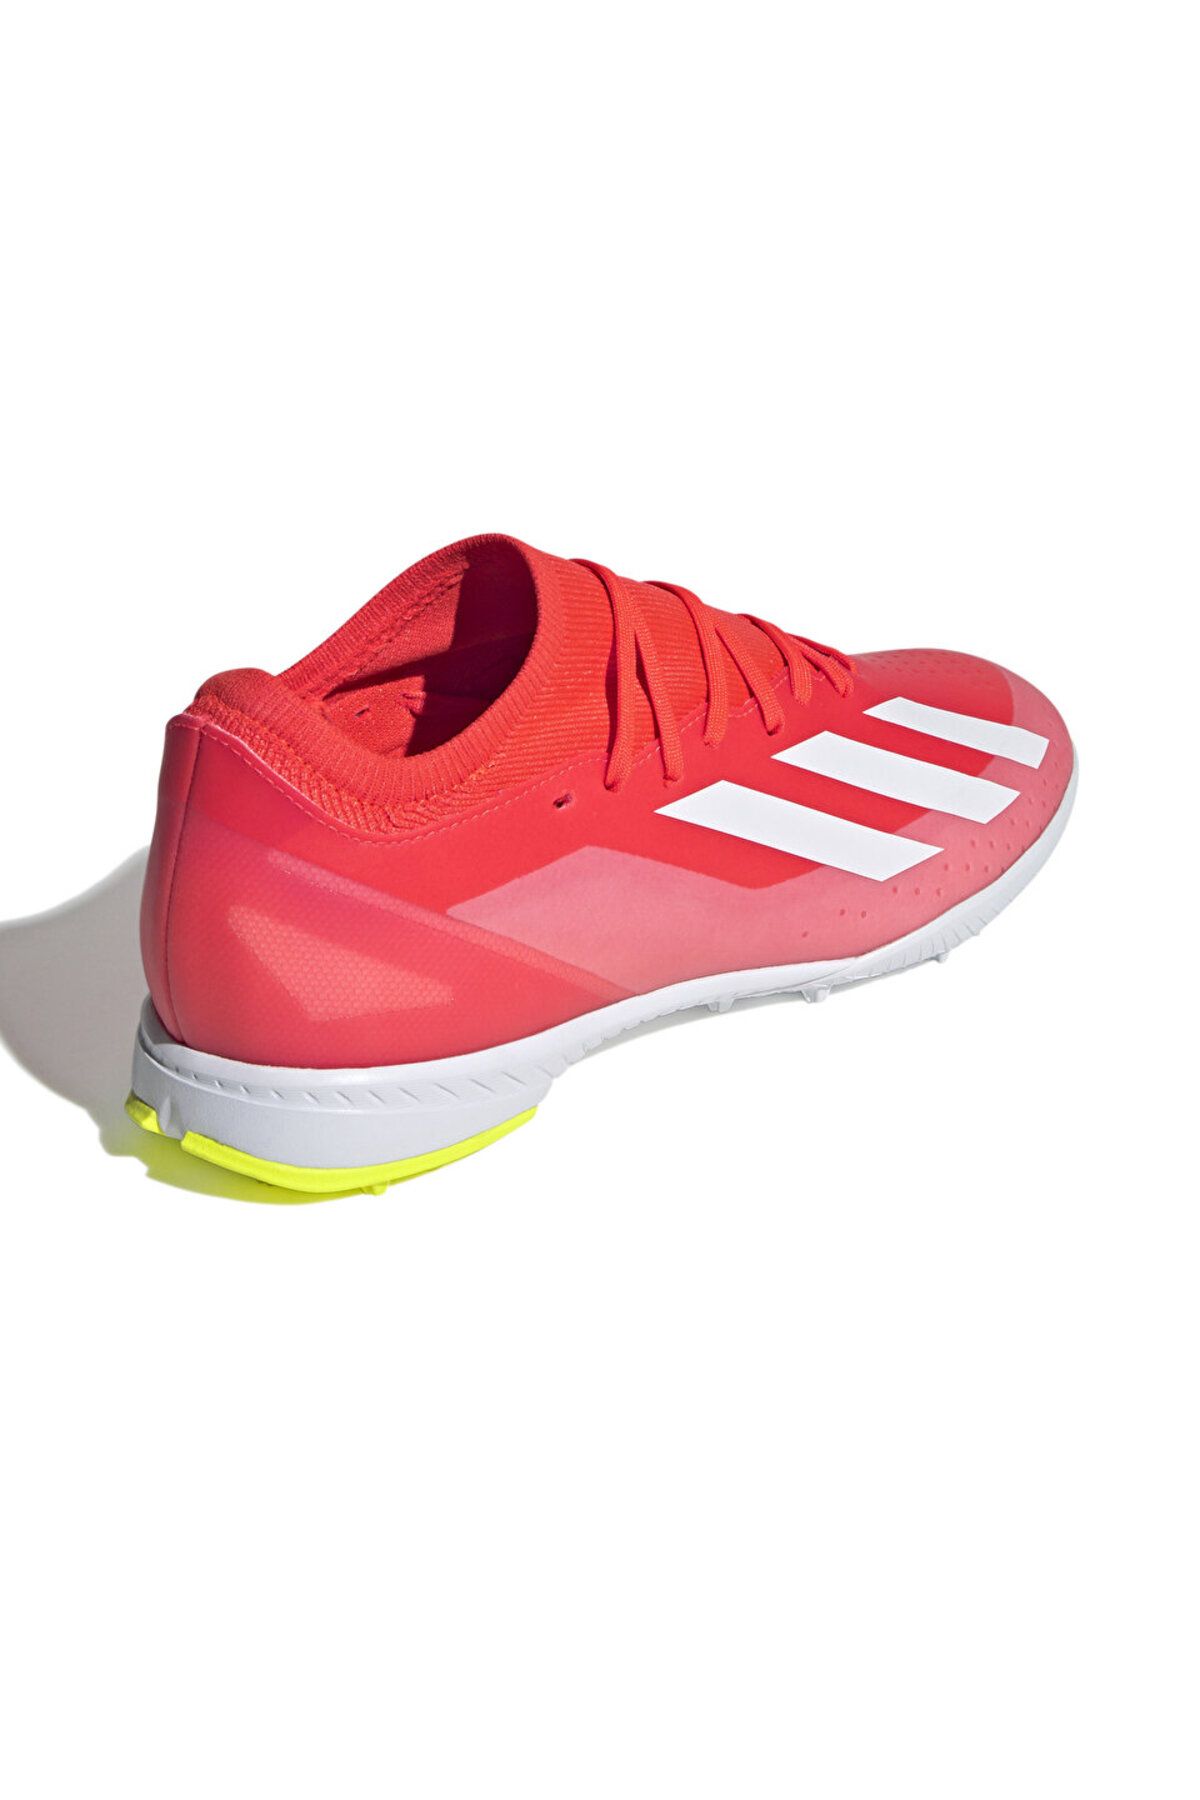 adidas X کفش های فرش مردانه لیگ دیوانه IF0699 قرمز